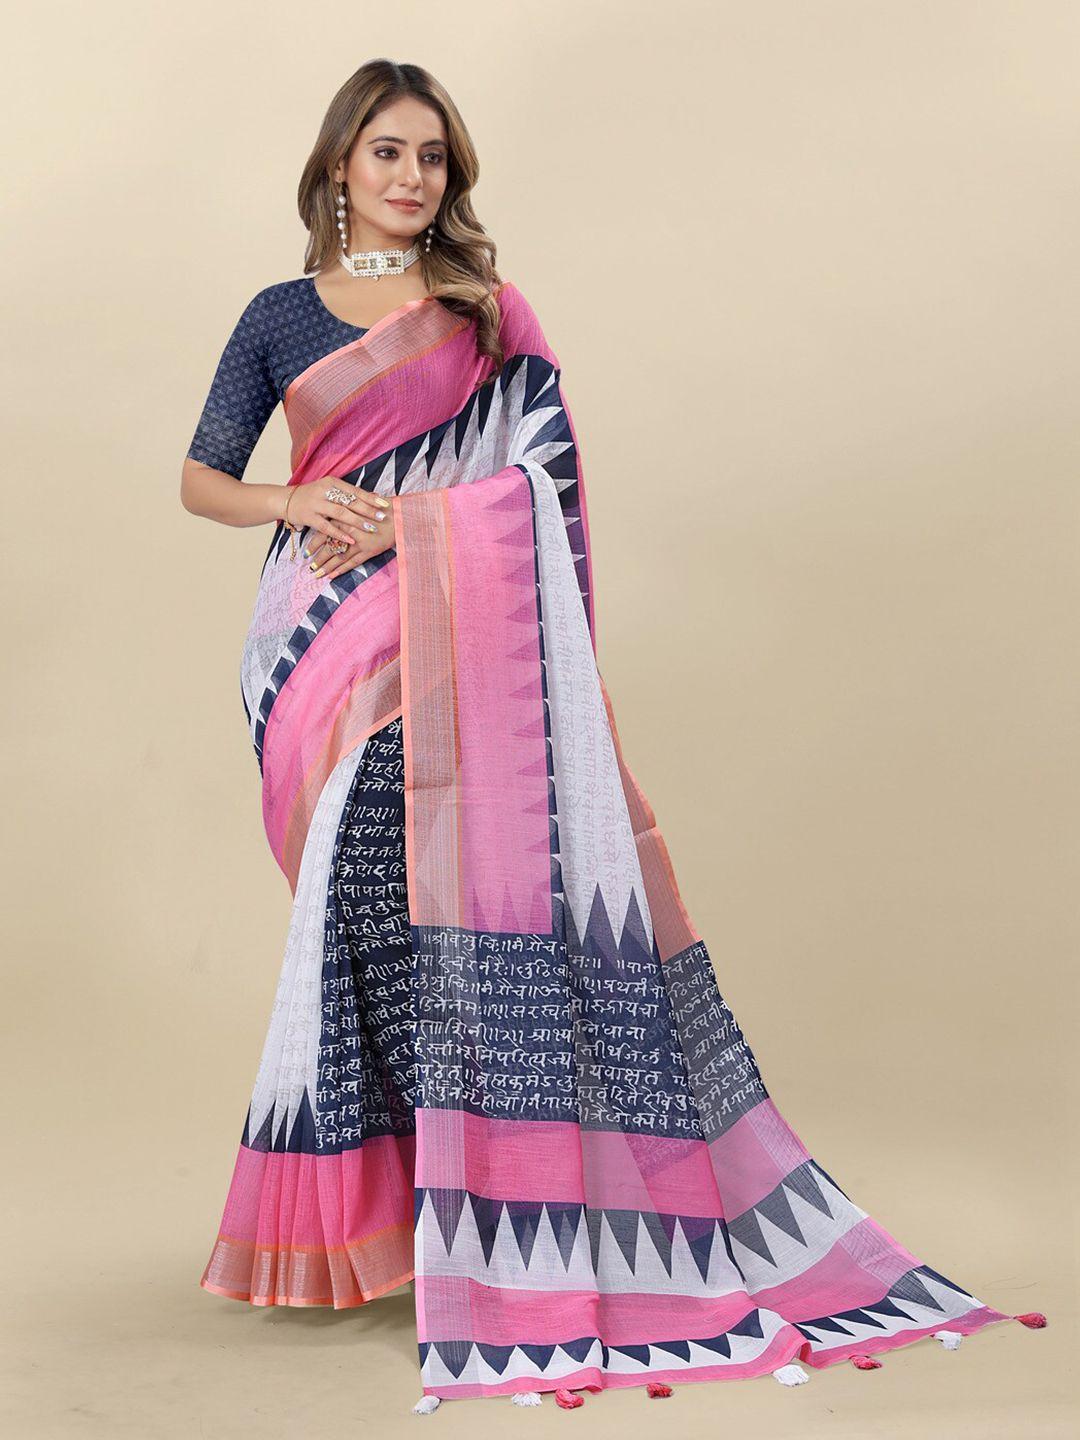 moksha designs pure linen saree